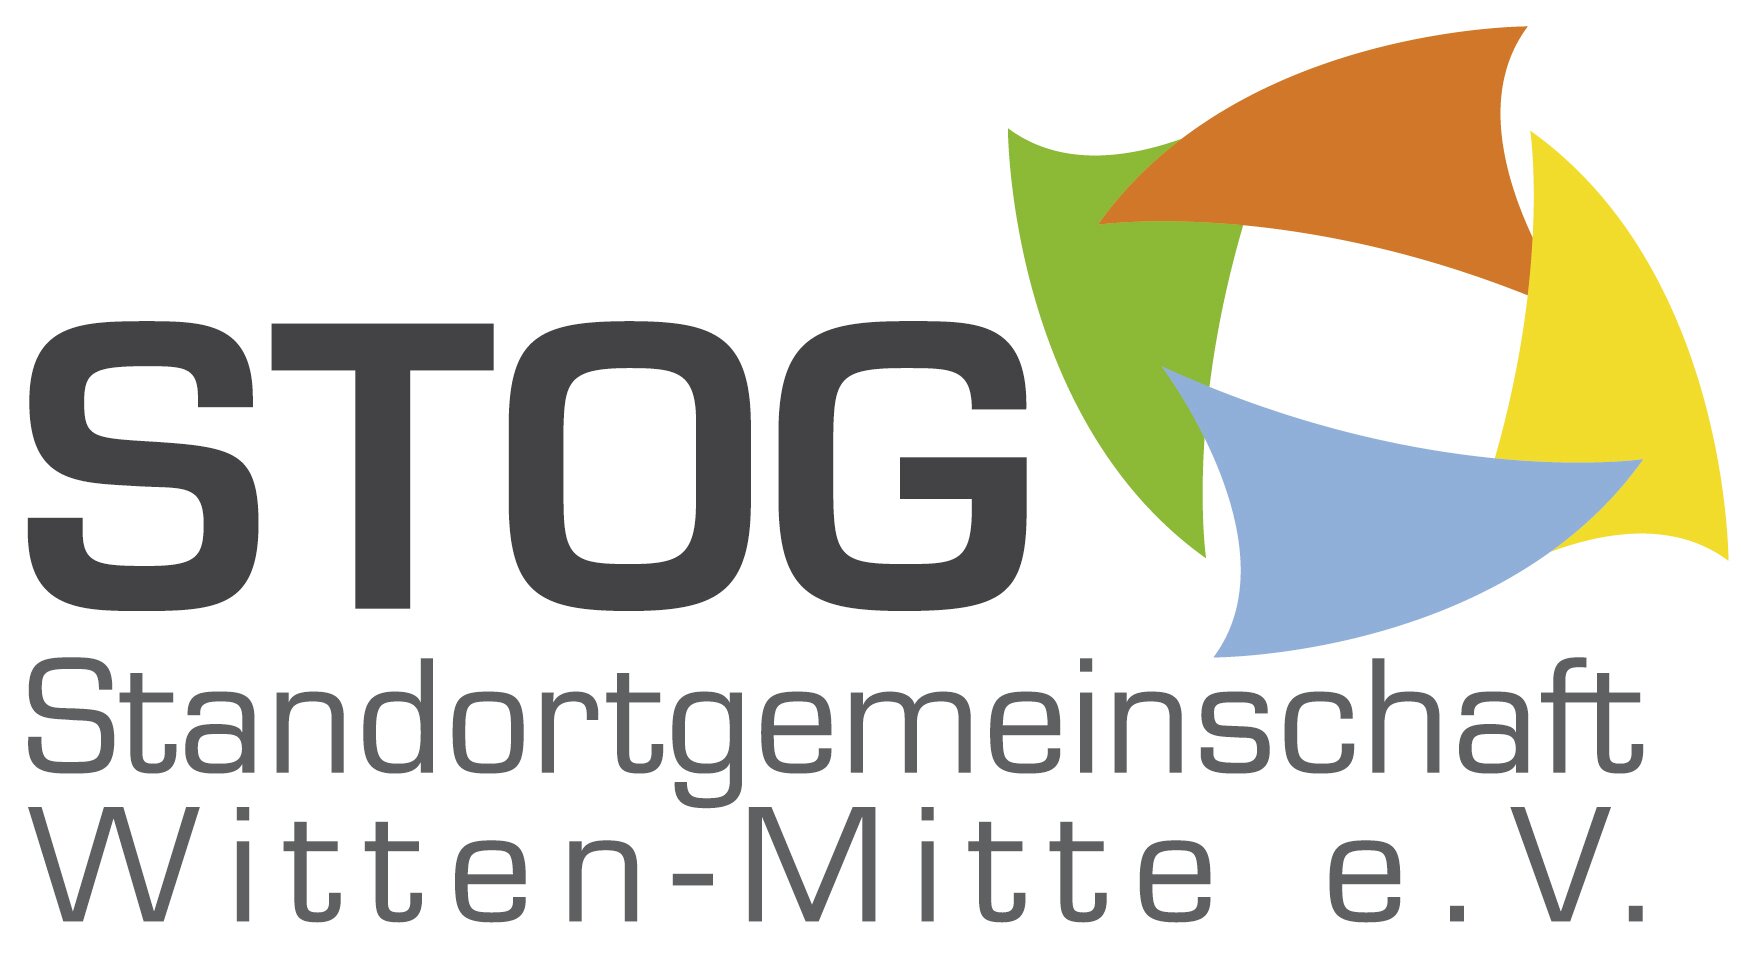 STOG-Logo-4c-L.jpg